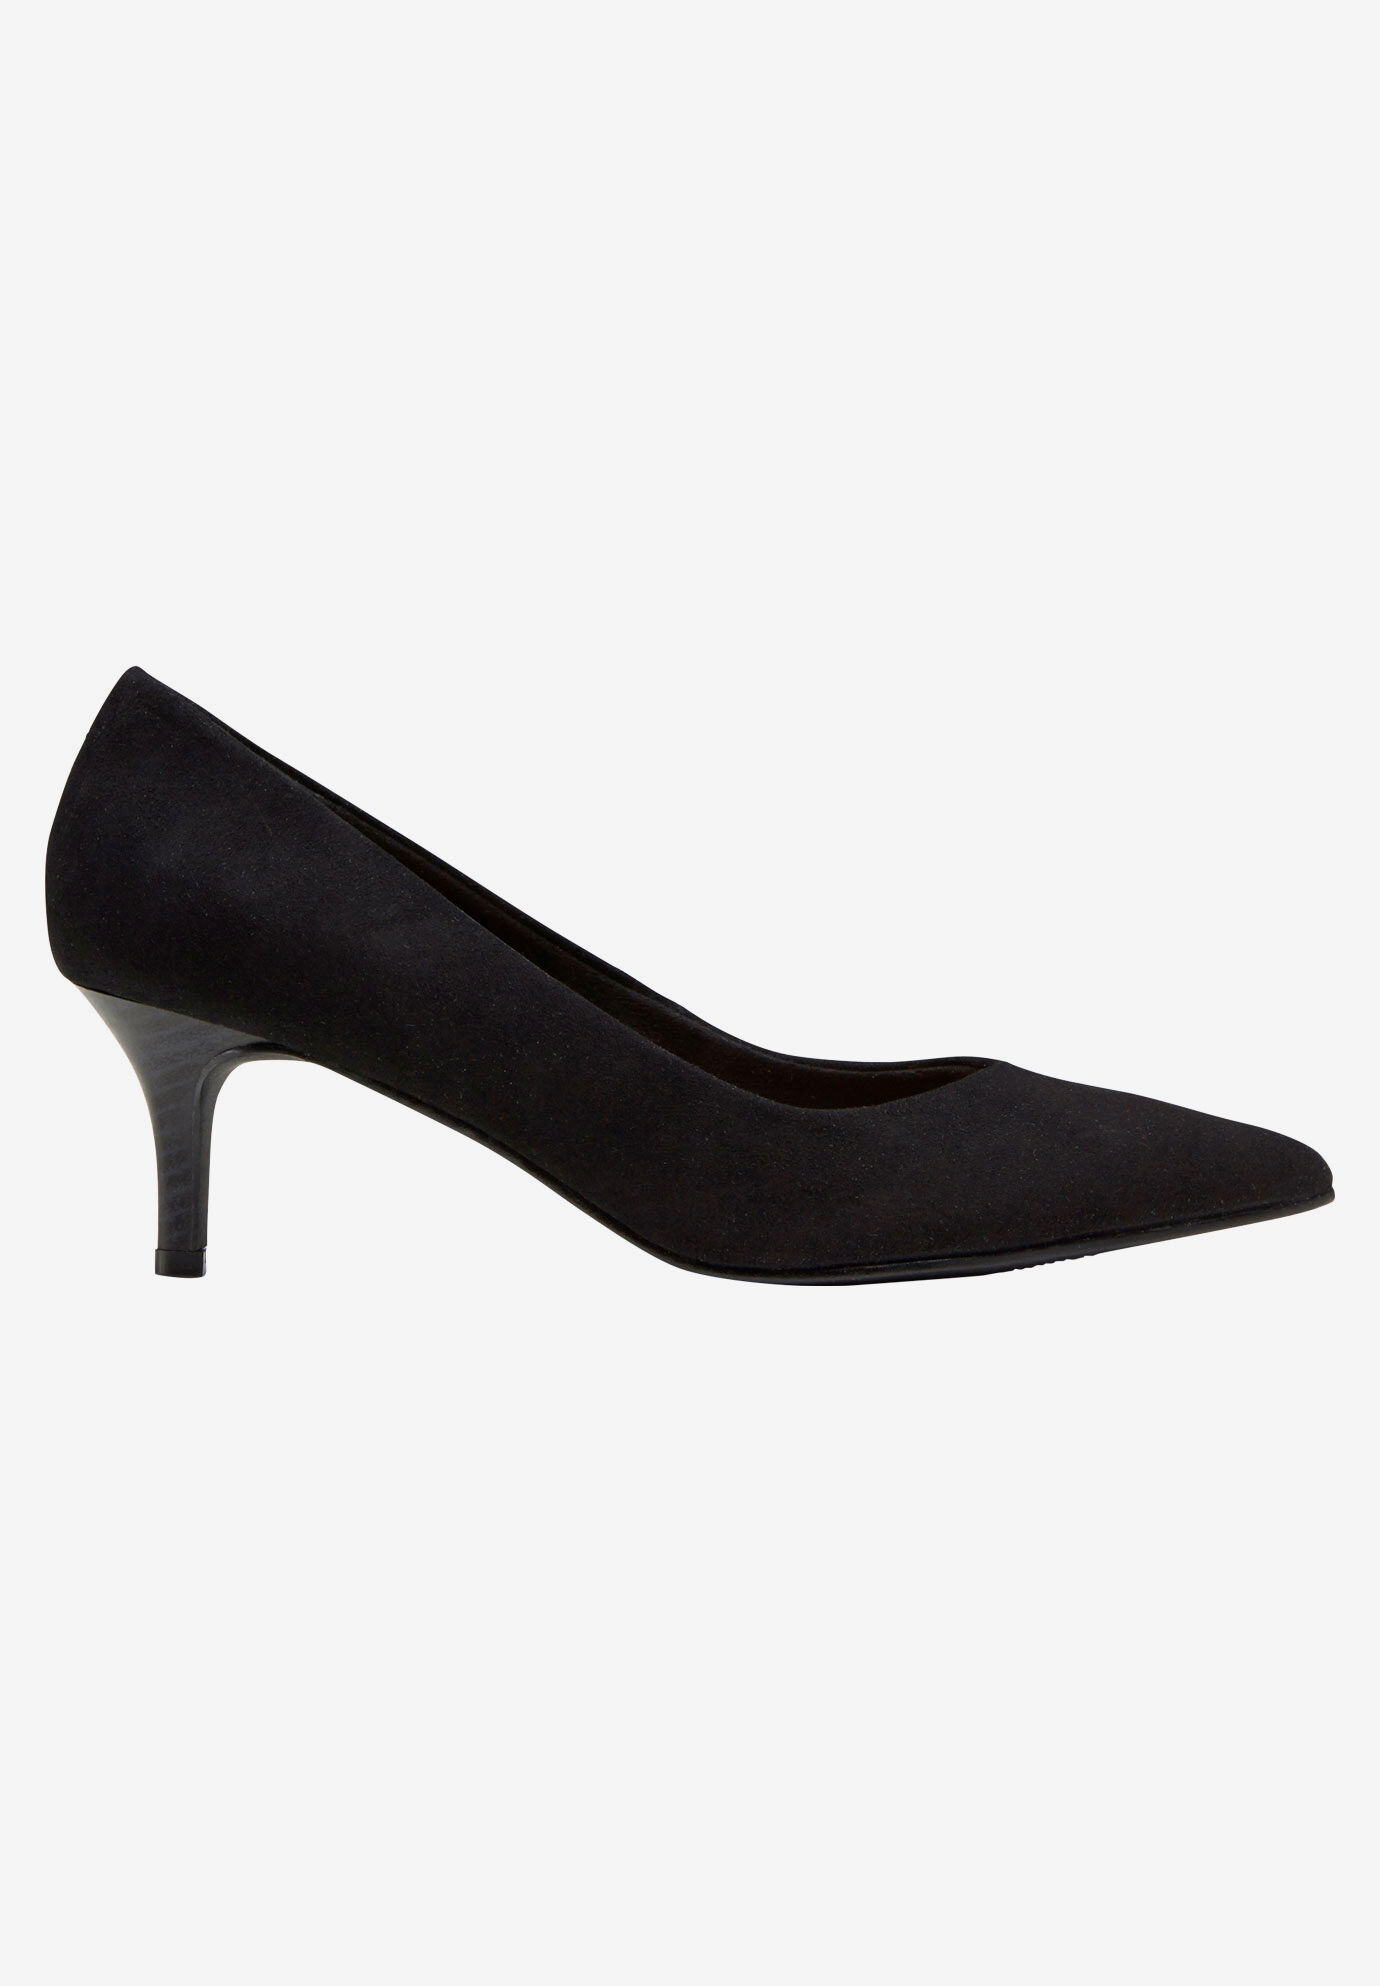 jessica london shoes heels